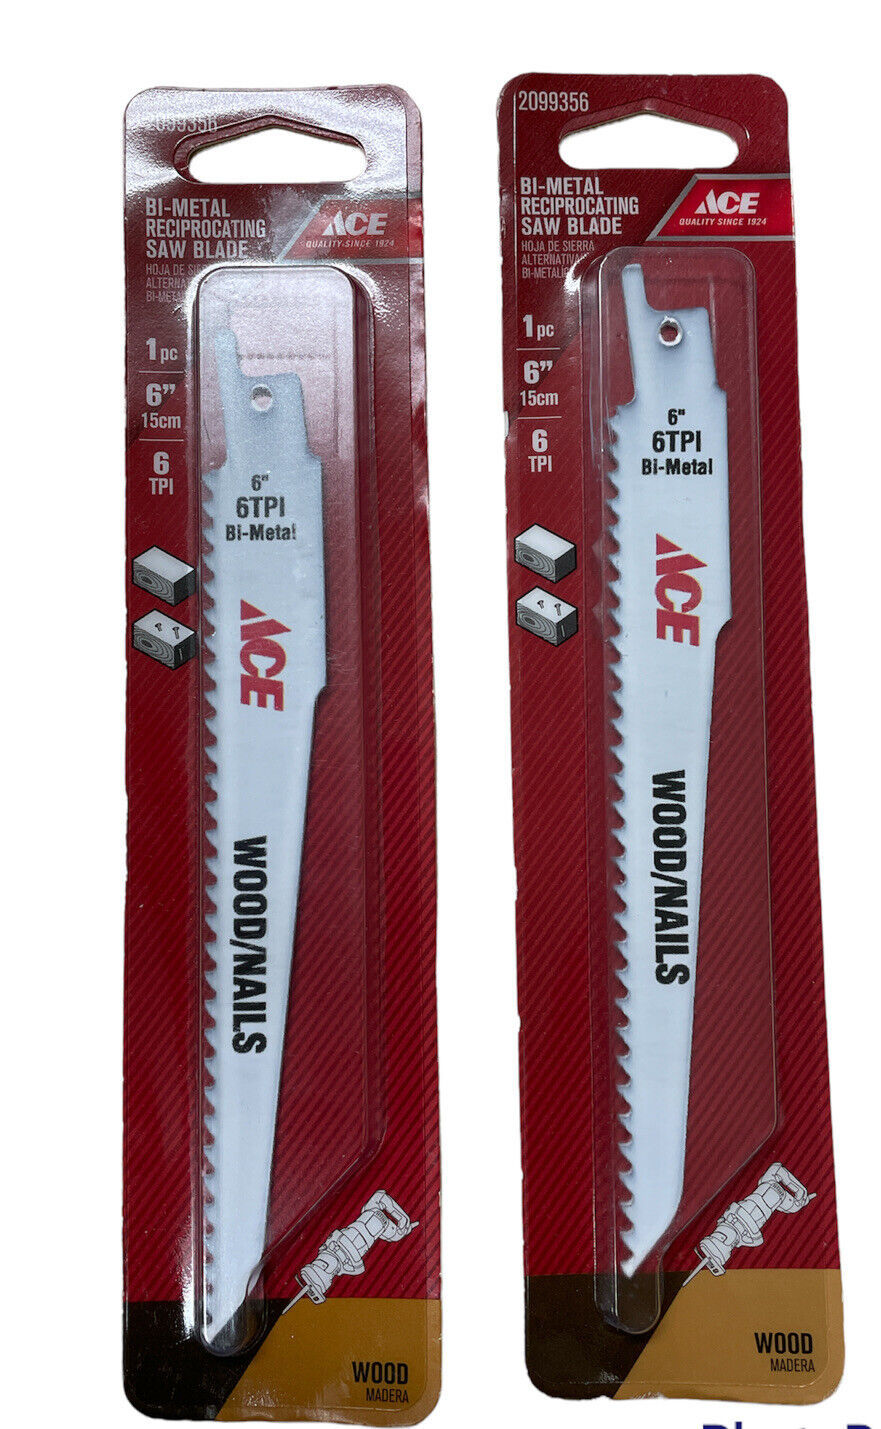 Ace 2099356 6" x 6 TPI Bi-Metal Wood/Nails Cutting Recip Saw Blade Pack of 2 - $14.35